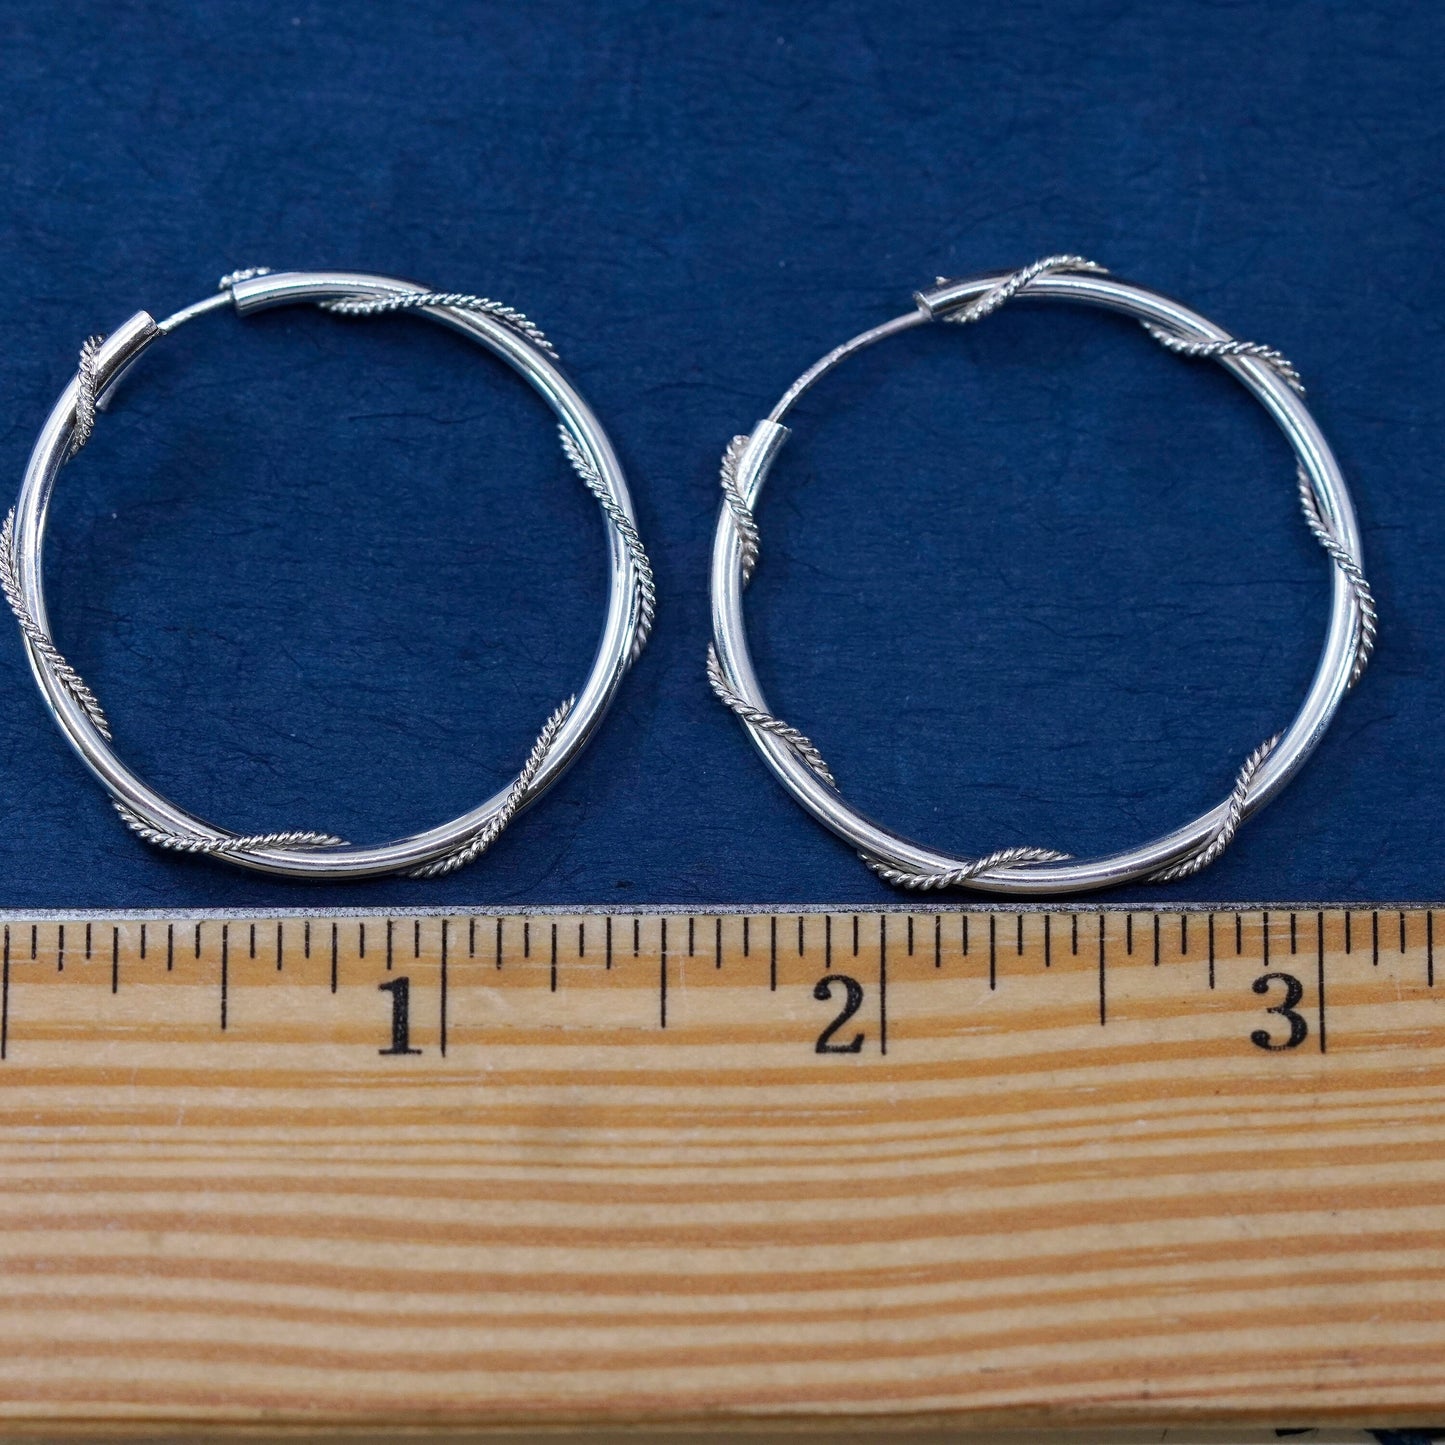 1.5”, vintage Sterling silver handmade hoop, 925 earrings with cable around